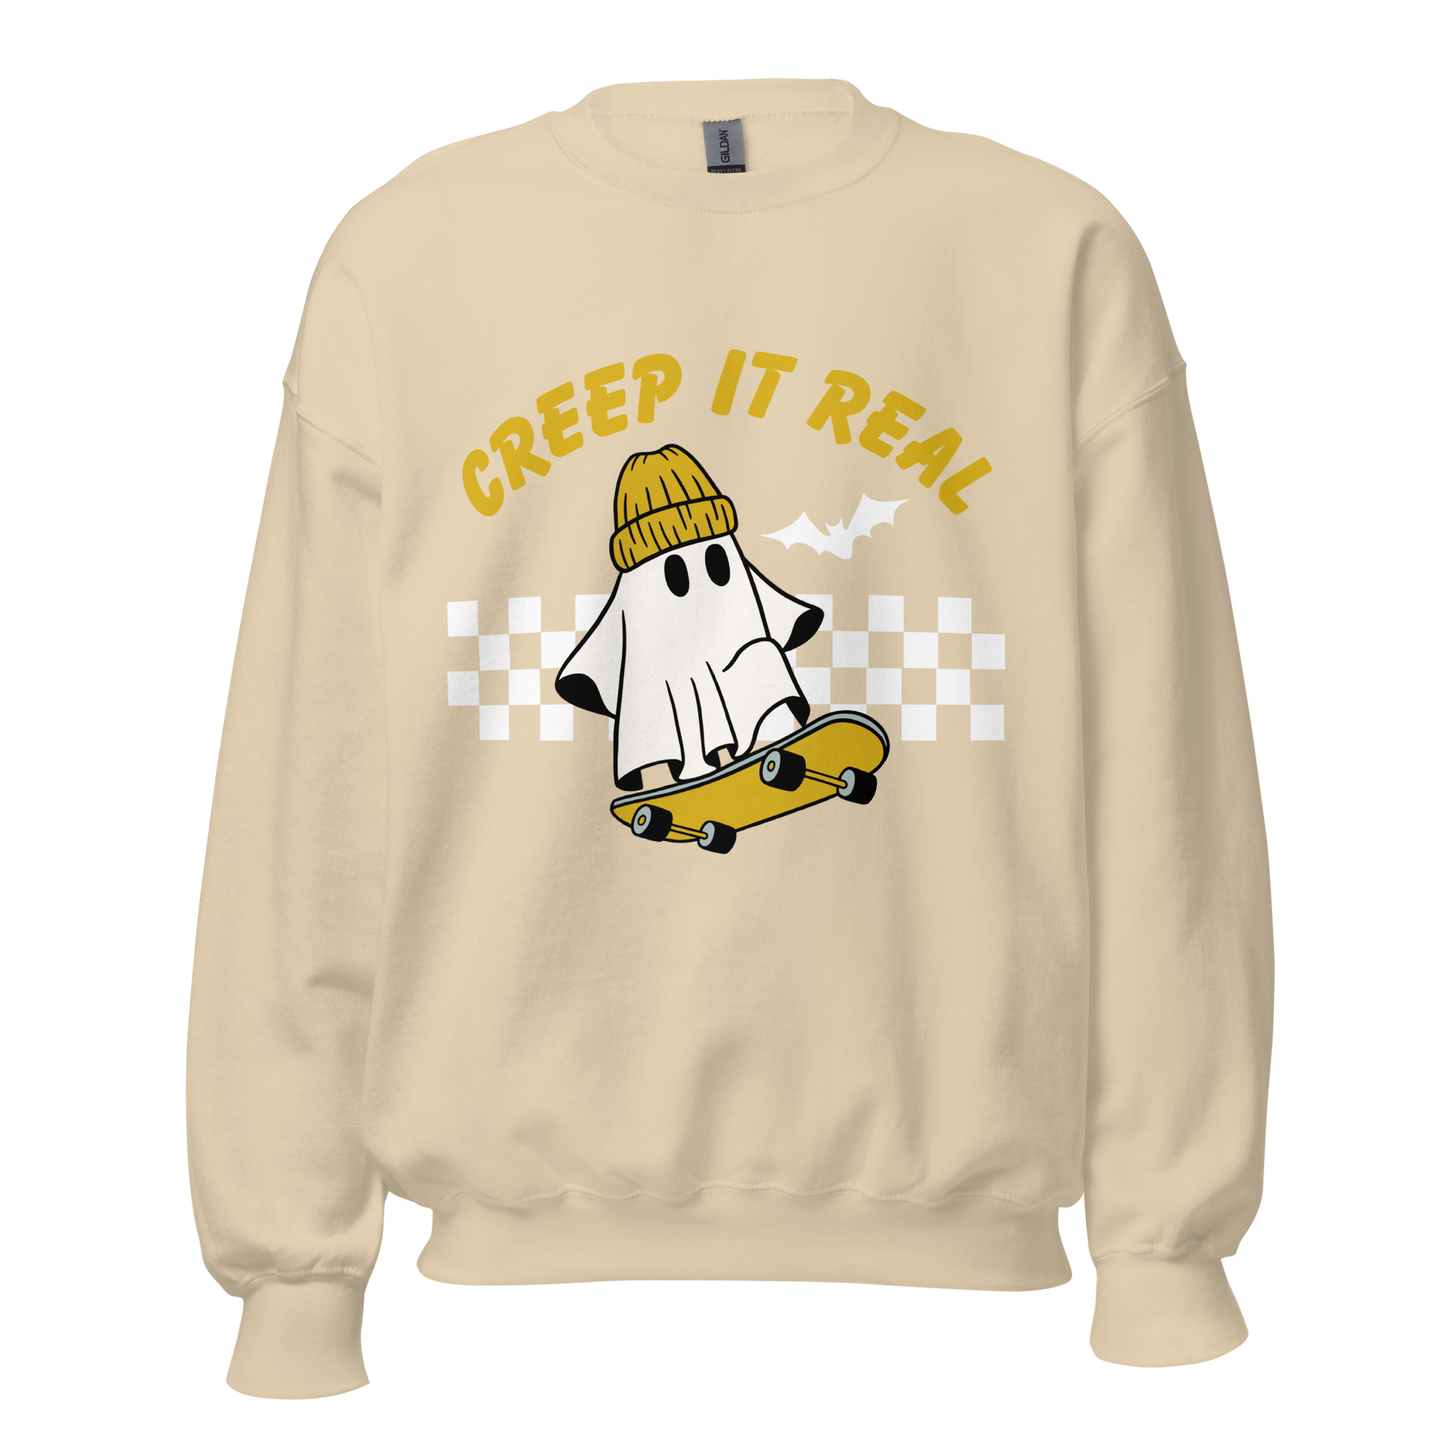 Creep It Real Unisex Sweatshirt